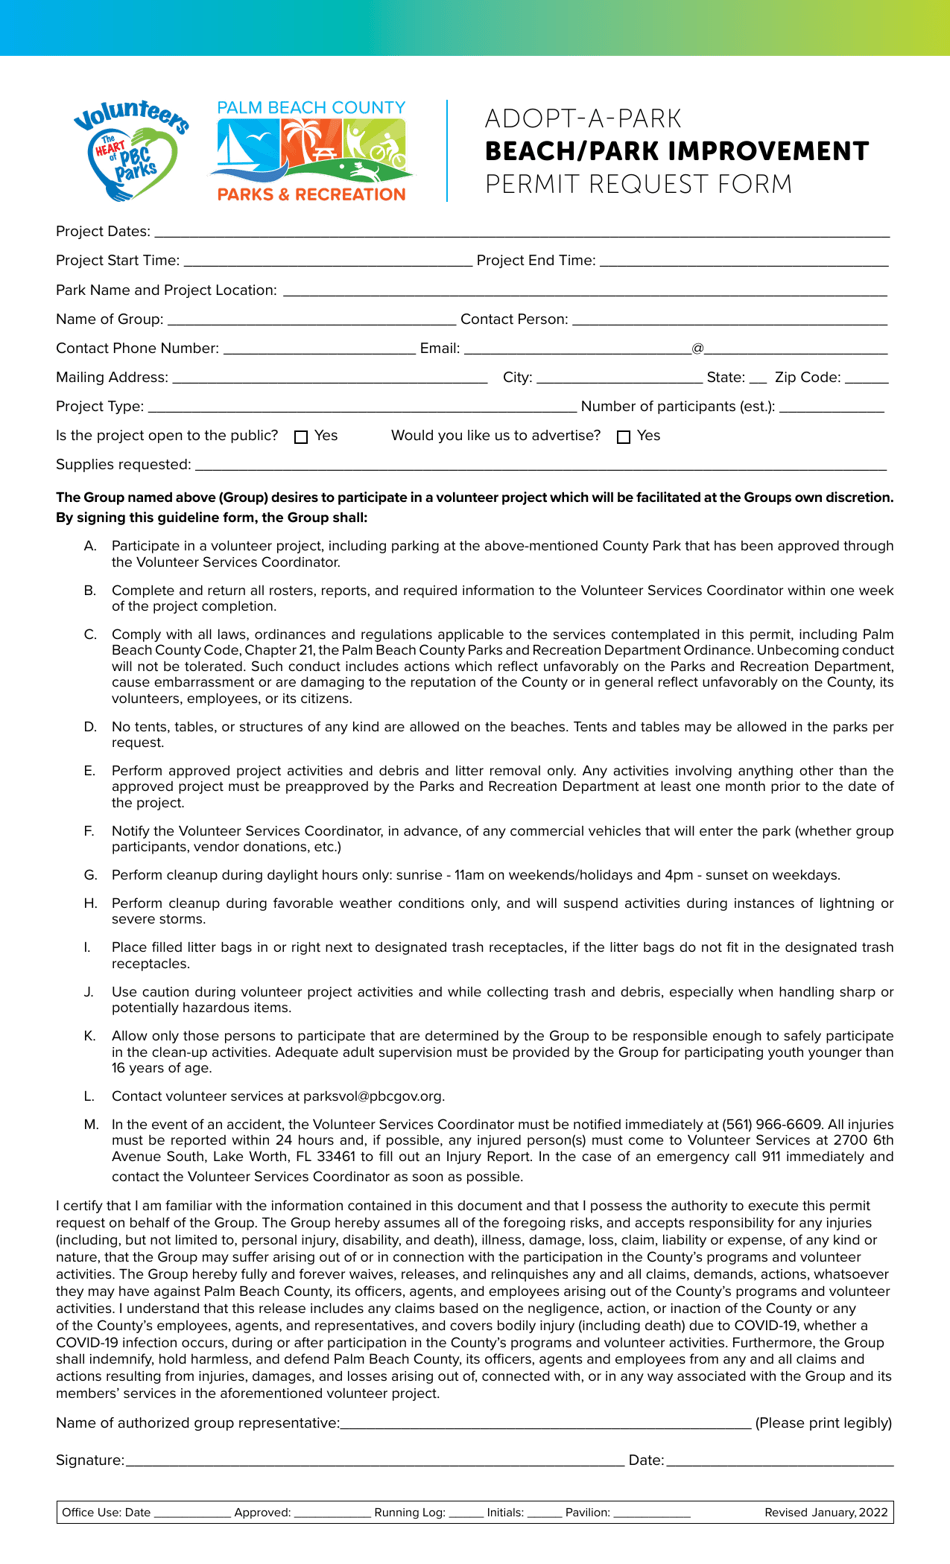 Adopt-A-park Beach / Park Improvement Permit Request Form - Palm Beach County, Florida, Page 1